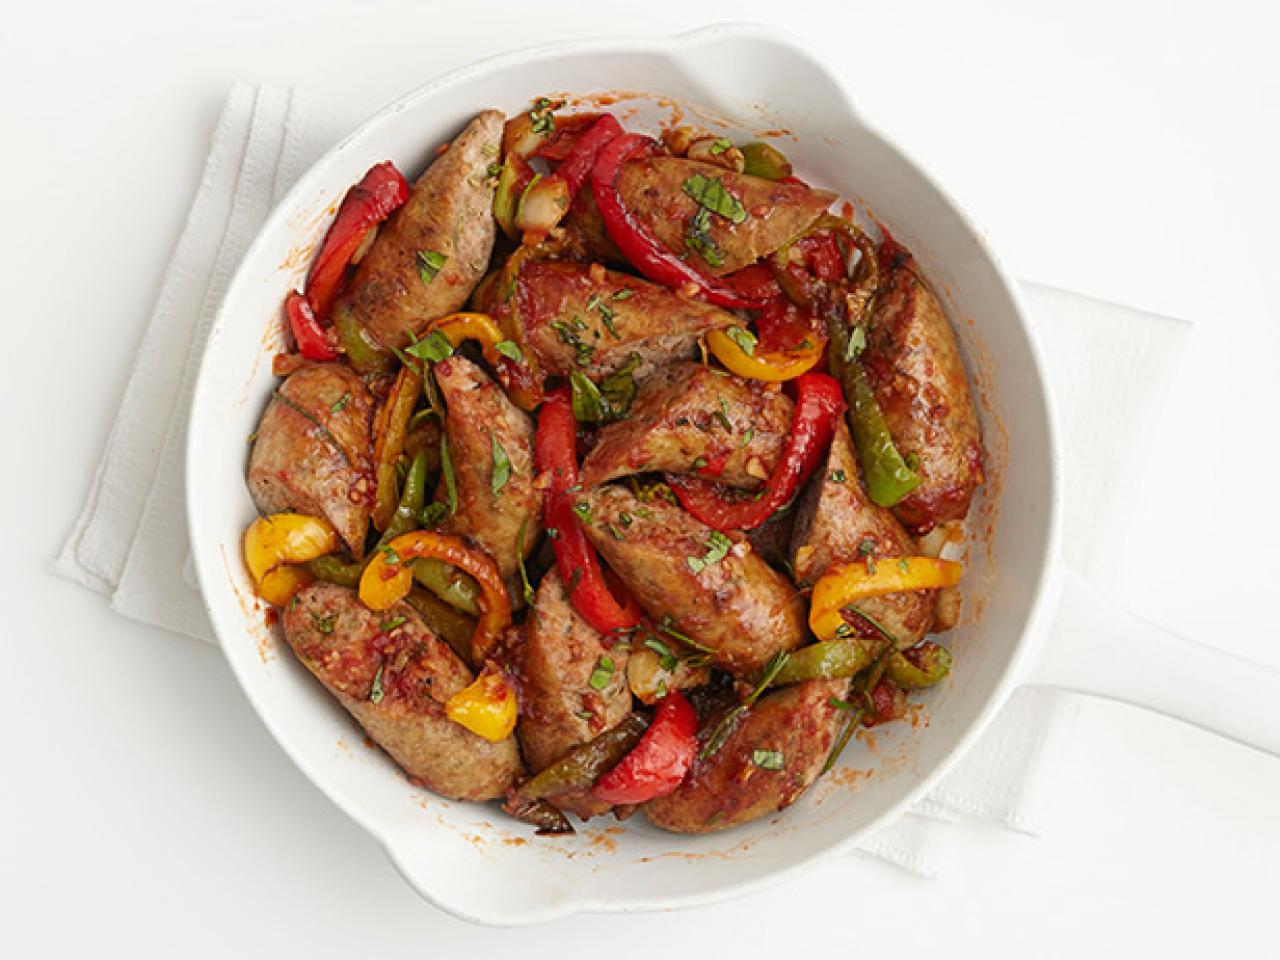 Turkey Sausage and Pepper Skillet Recipe